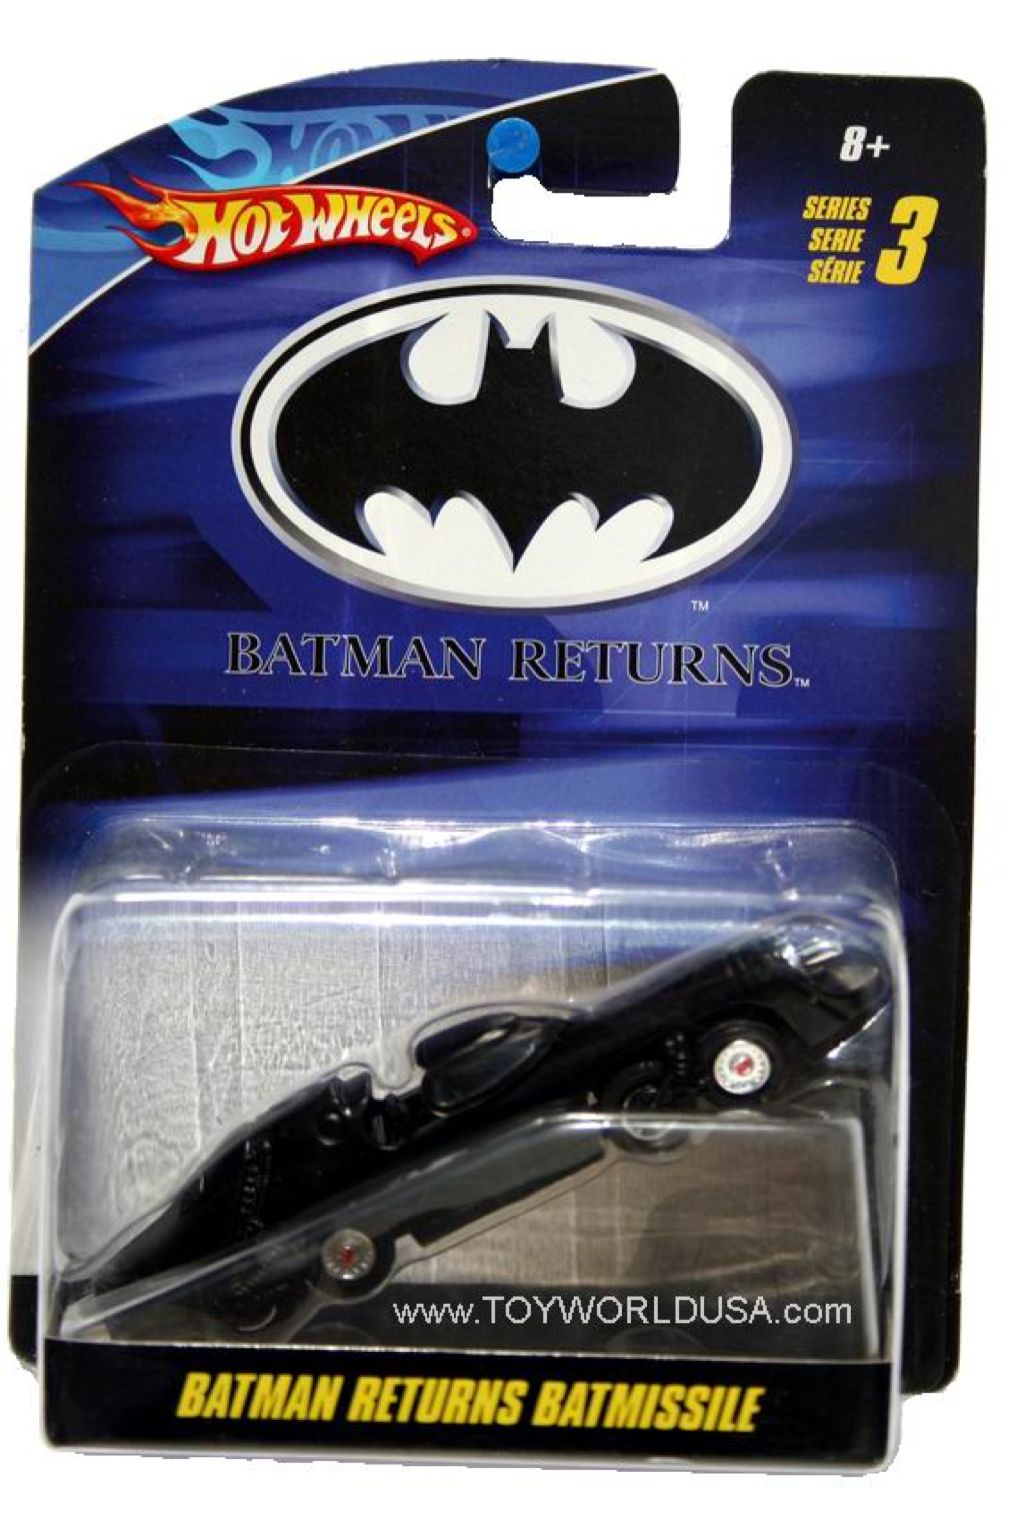 Batman Returns: Batmissile - Batman Series 1:50 Scale toy car collectible [Barcode 027084828306] - Main Image 2